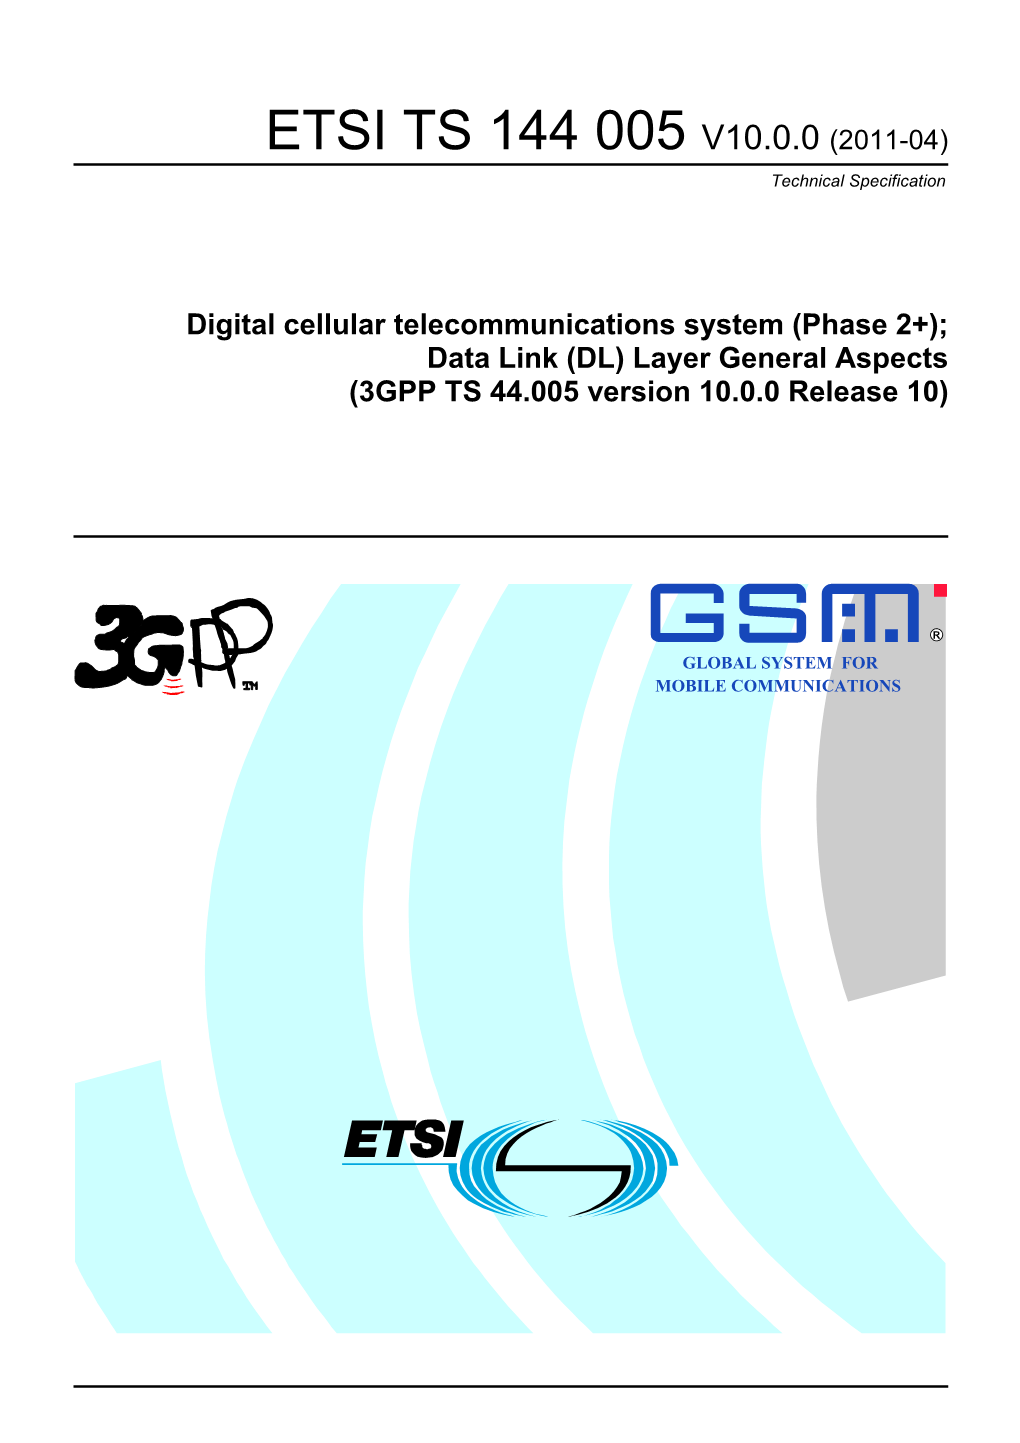 ETSI TS 144 005 V10.0.0 (2011-04) Technical Specification